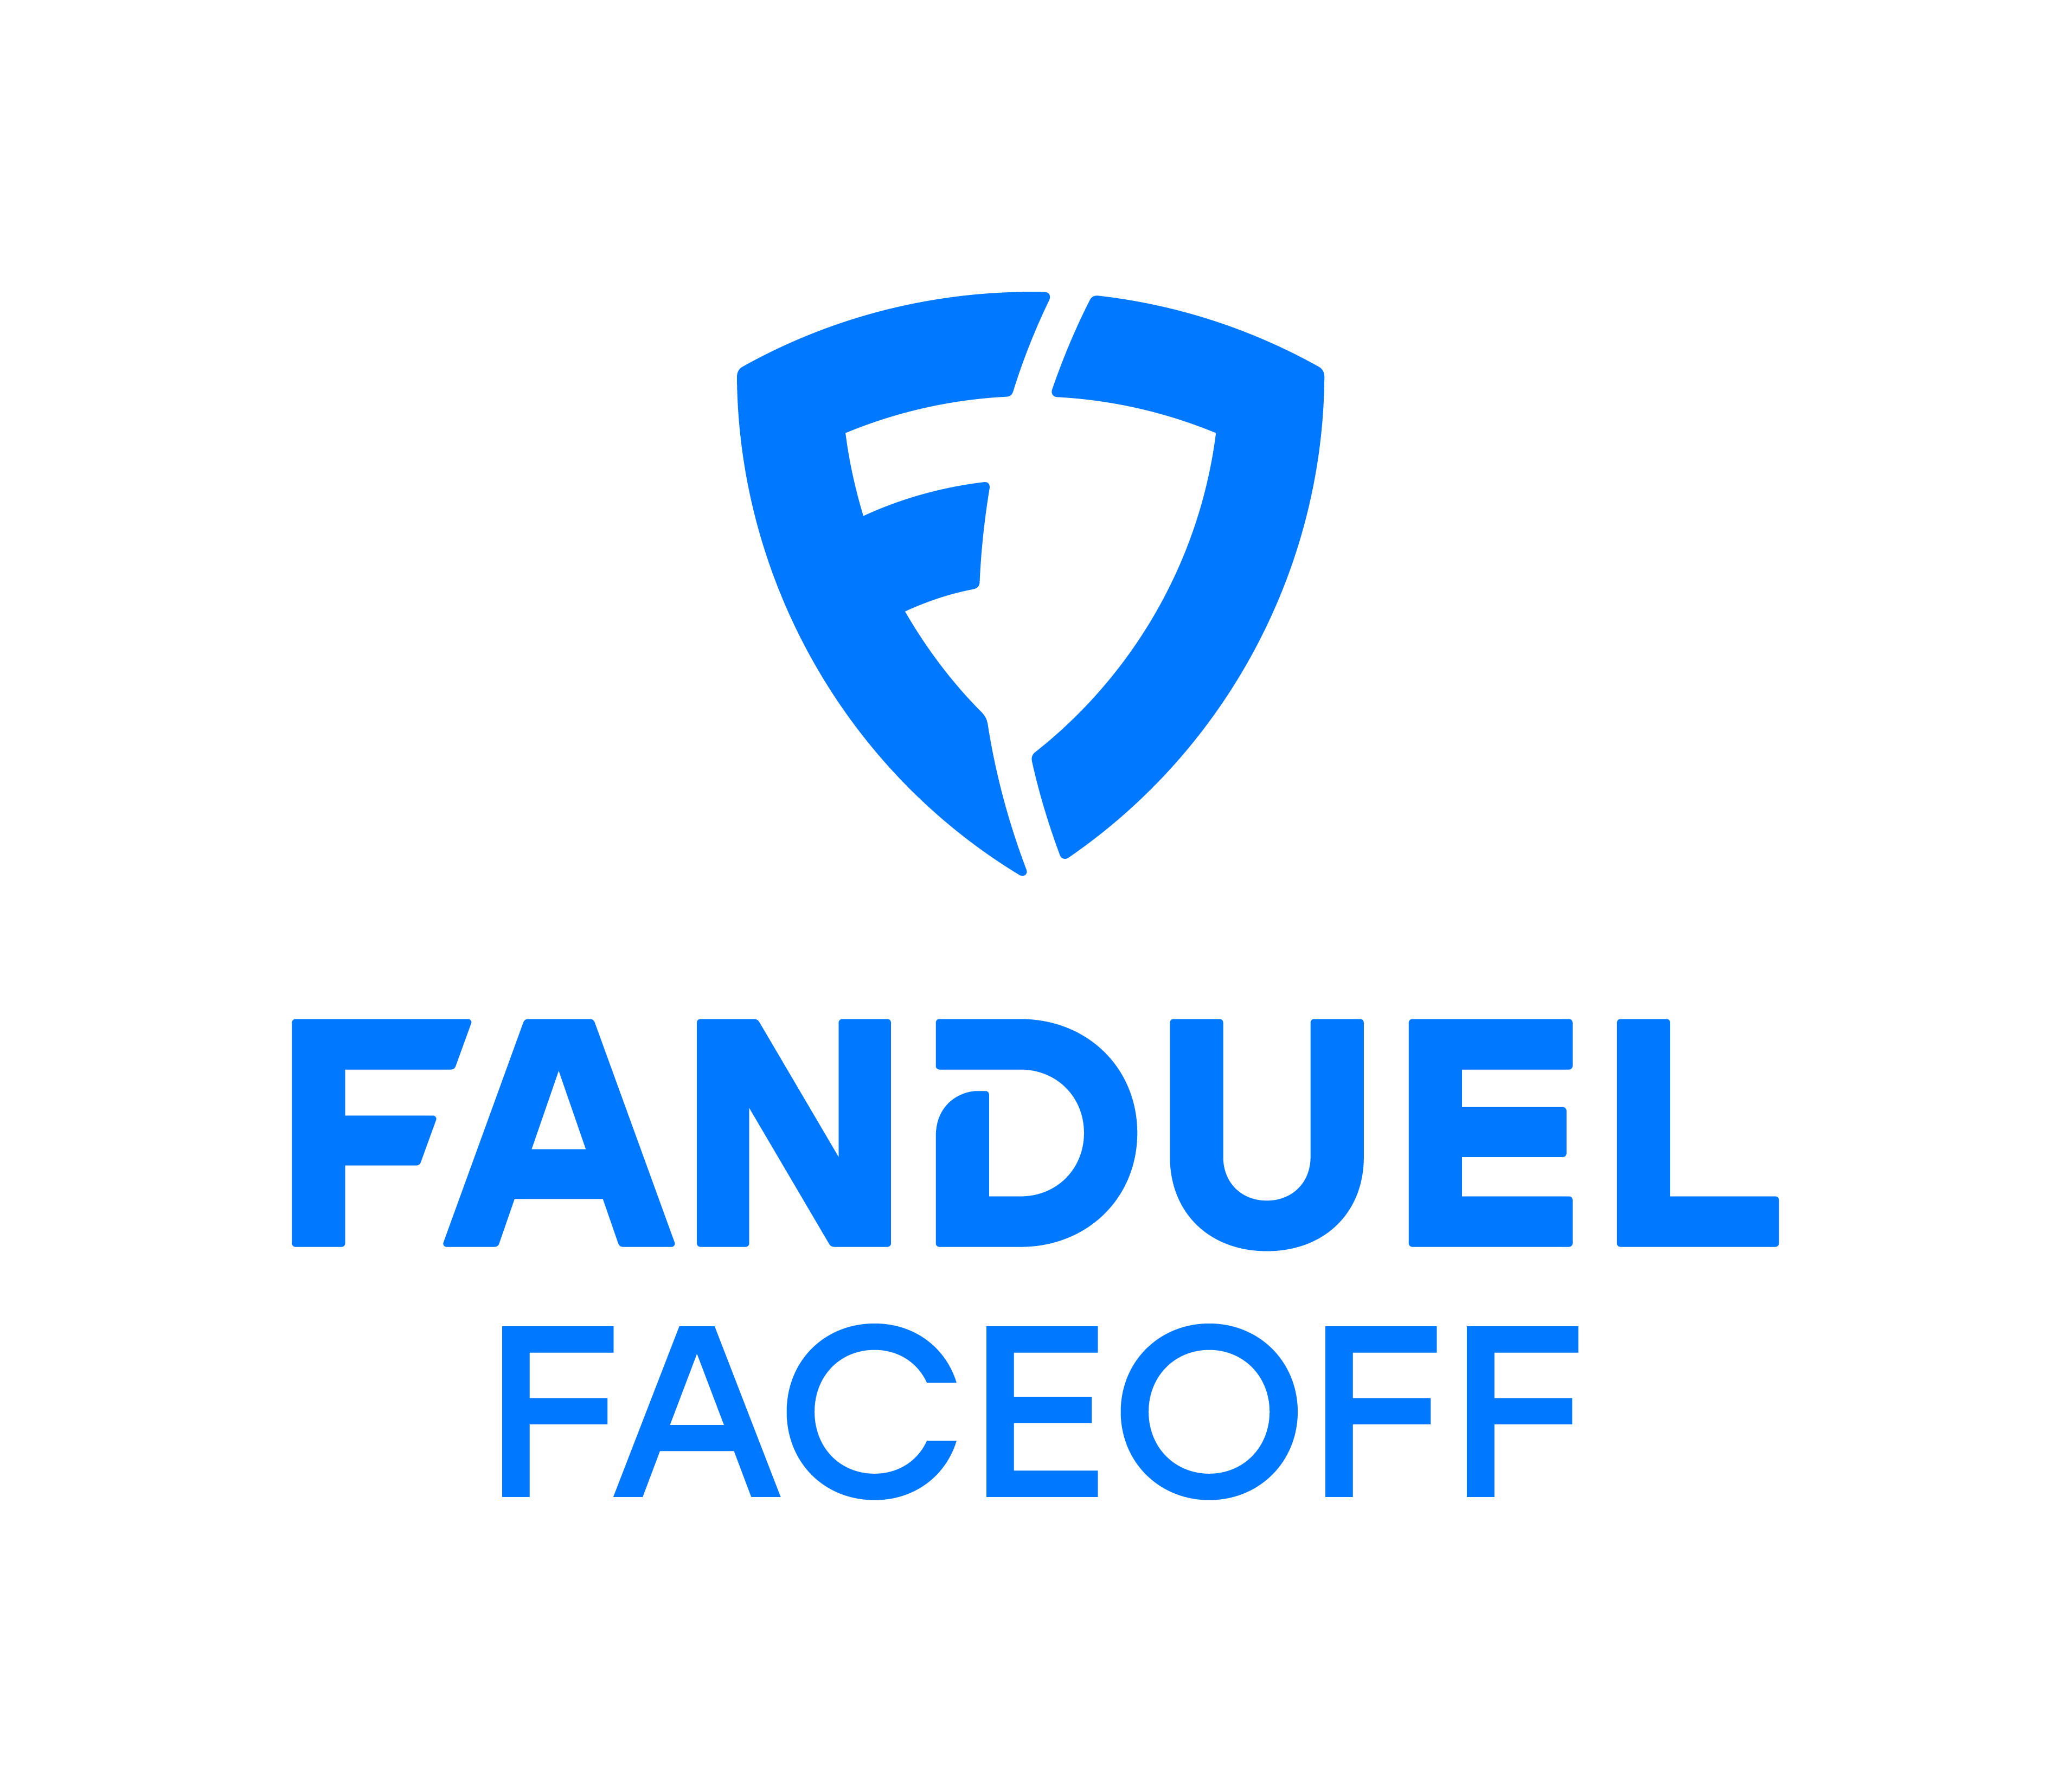 FanDuel face-off logo